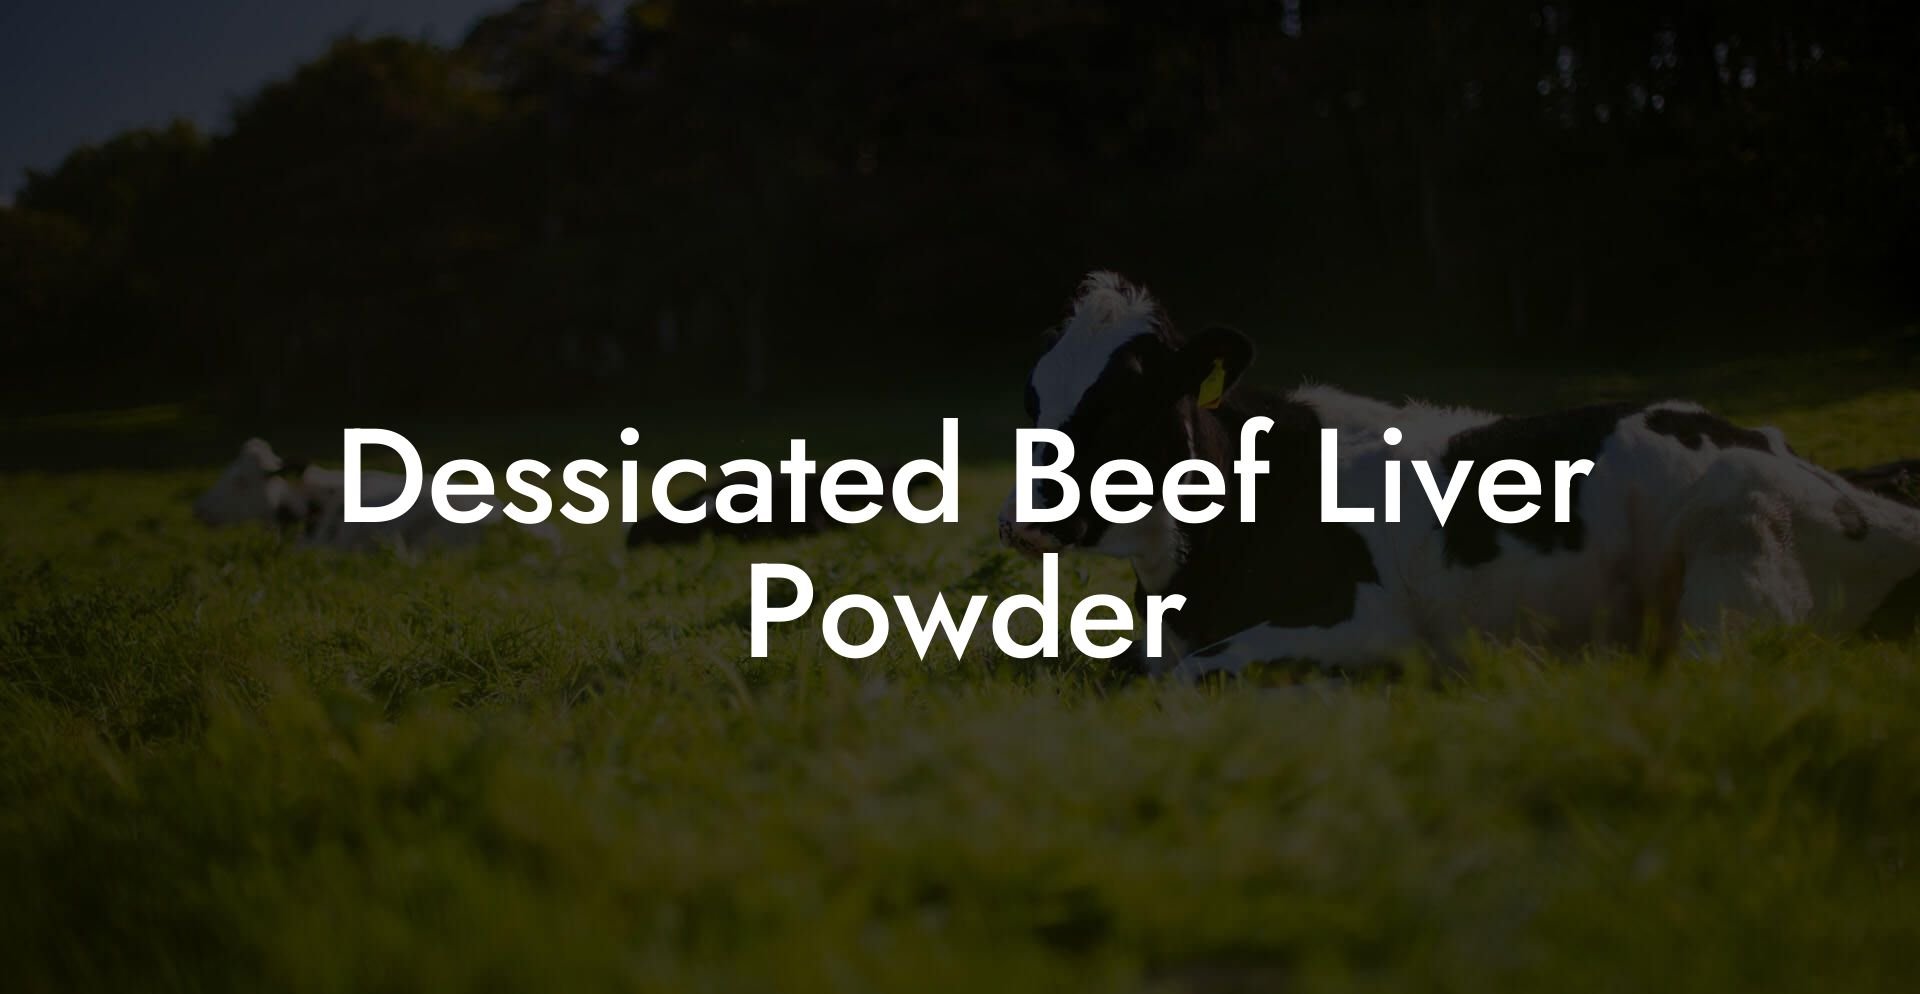 Dessicated Beef Liver Powder